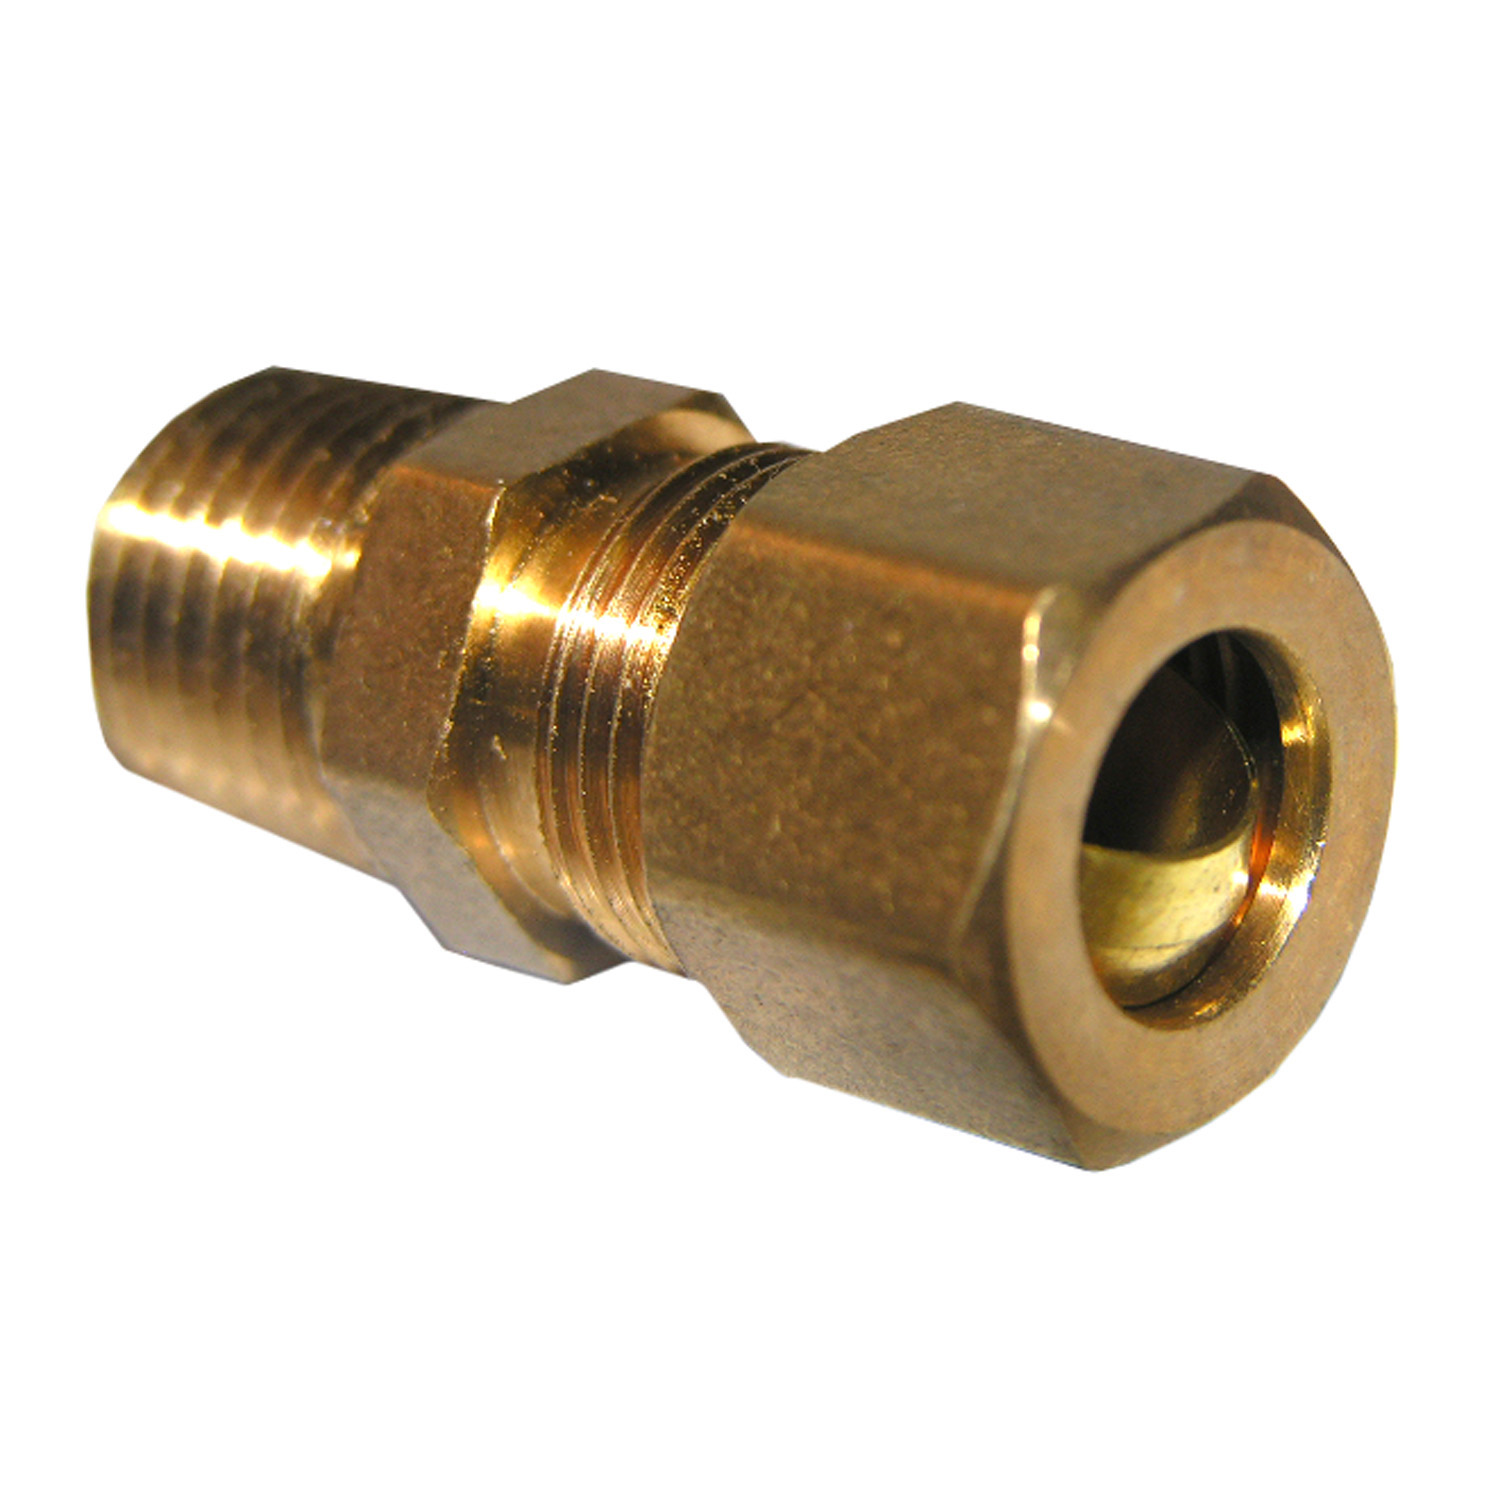 17-6833 Pipe Adapter, 3/8 x 1/4 in, Compression x MPT, Brass, 150 psi Pressure